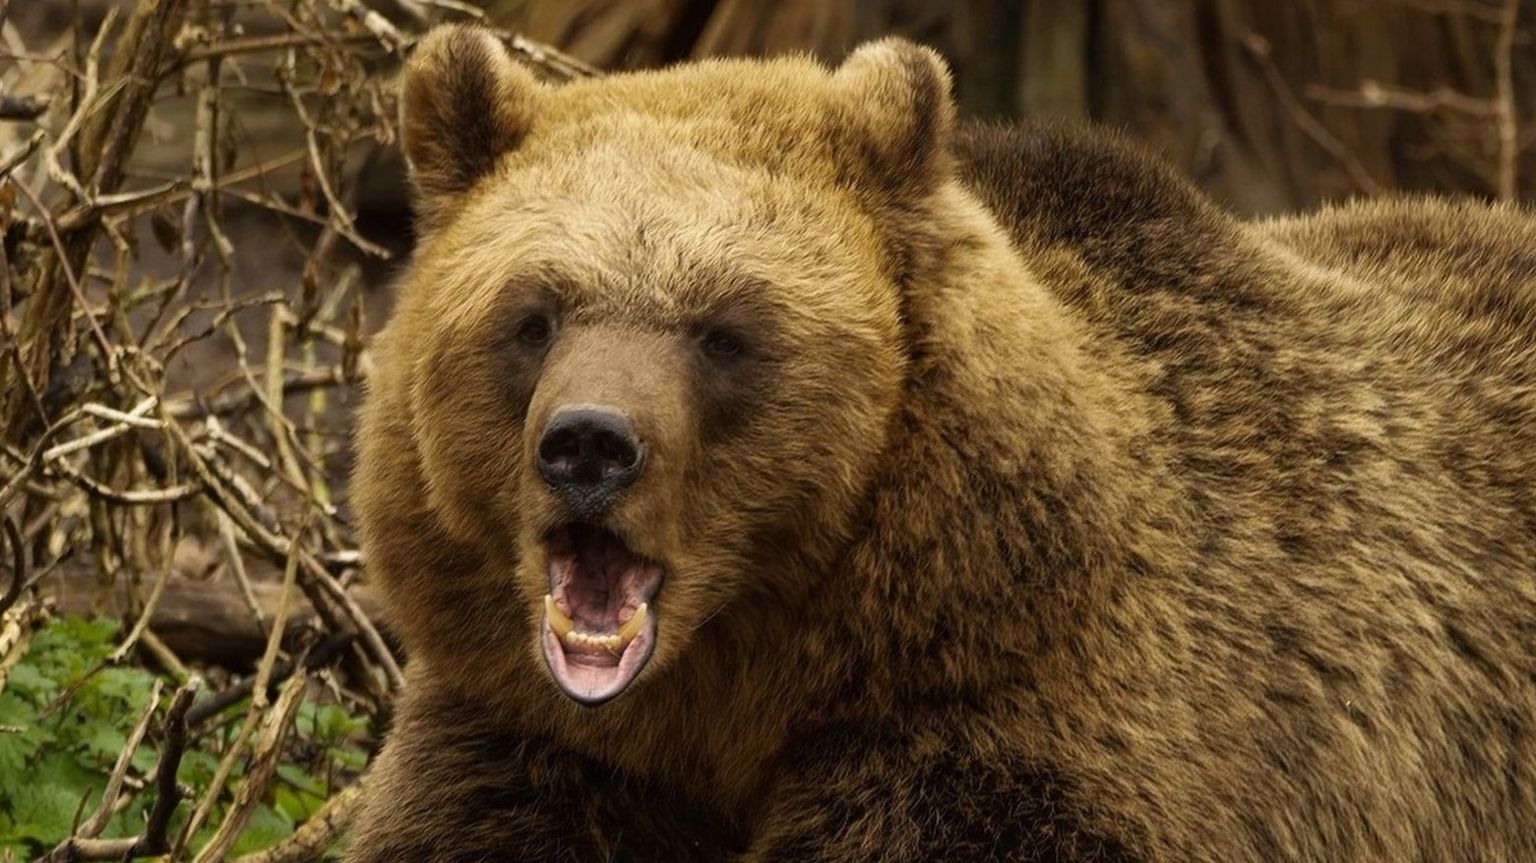 A European brown bear yawns showing its teeth at Bear Wood at the Bristol Zoo Project